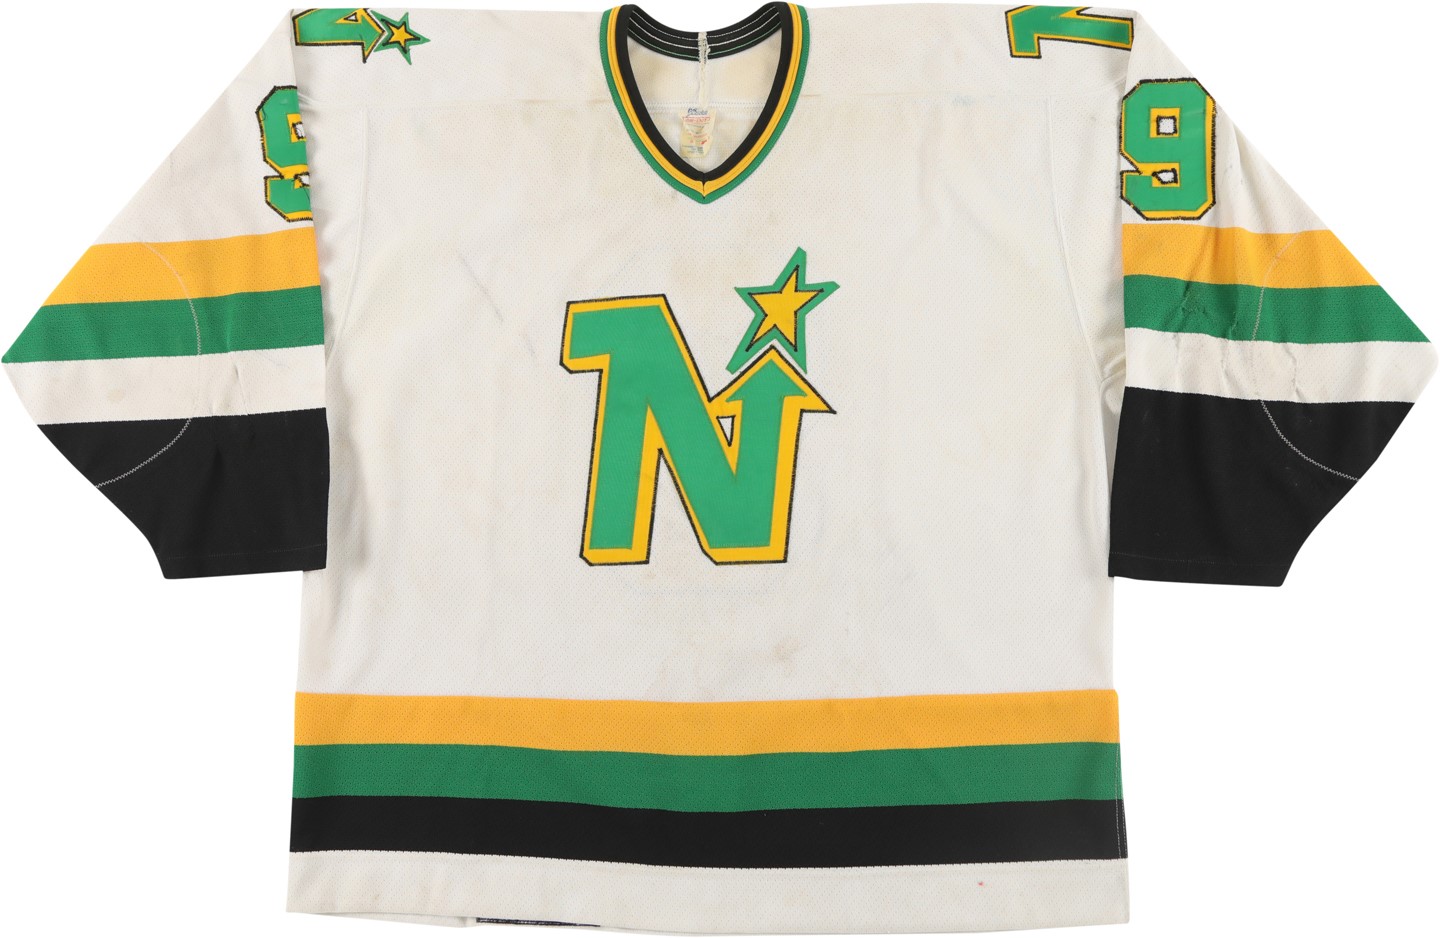 Hockey - 1989-90 Mike Modano Minnesota North Stars Game Worn Rookie Jersey